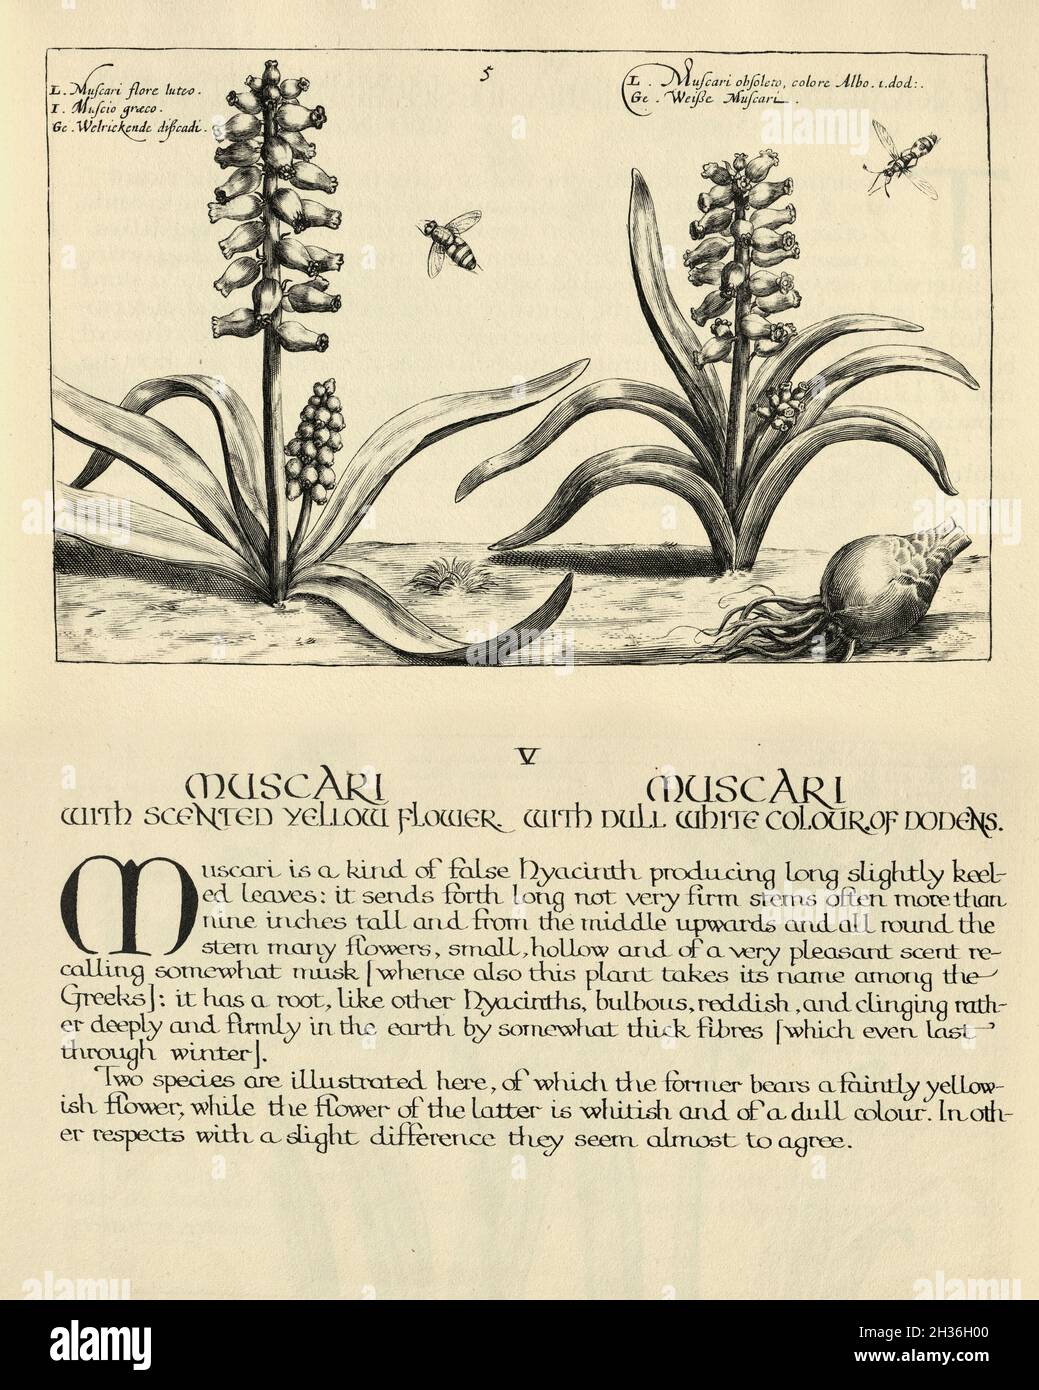 Botanical print of Muscari, grape hyacinth from Hortus Floridus by Crispin de Passe, Vintage illustration Stock Photo